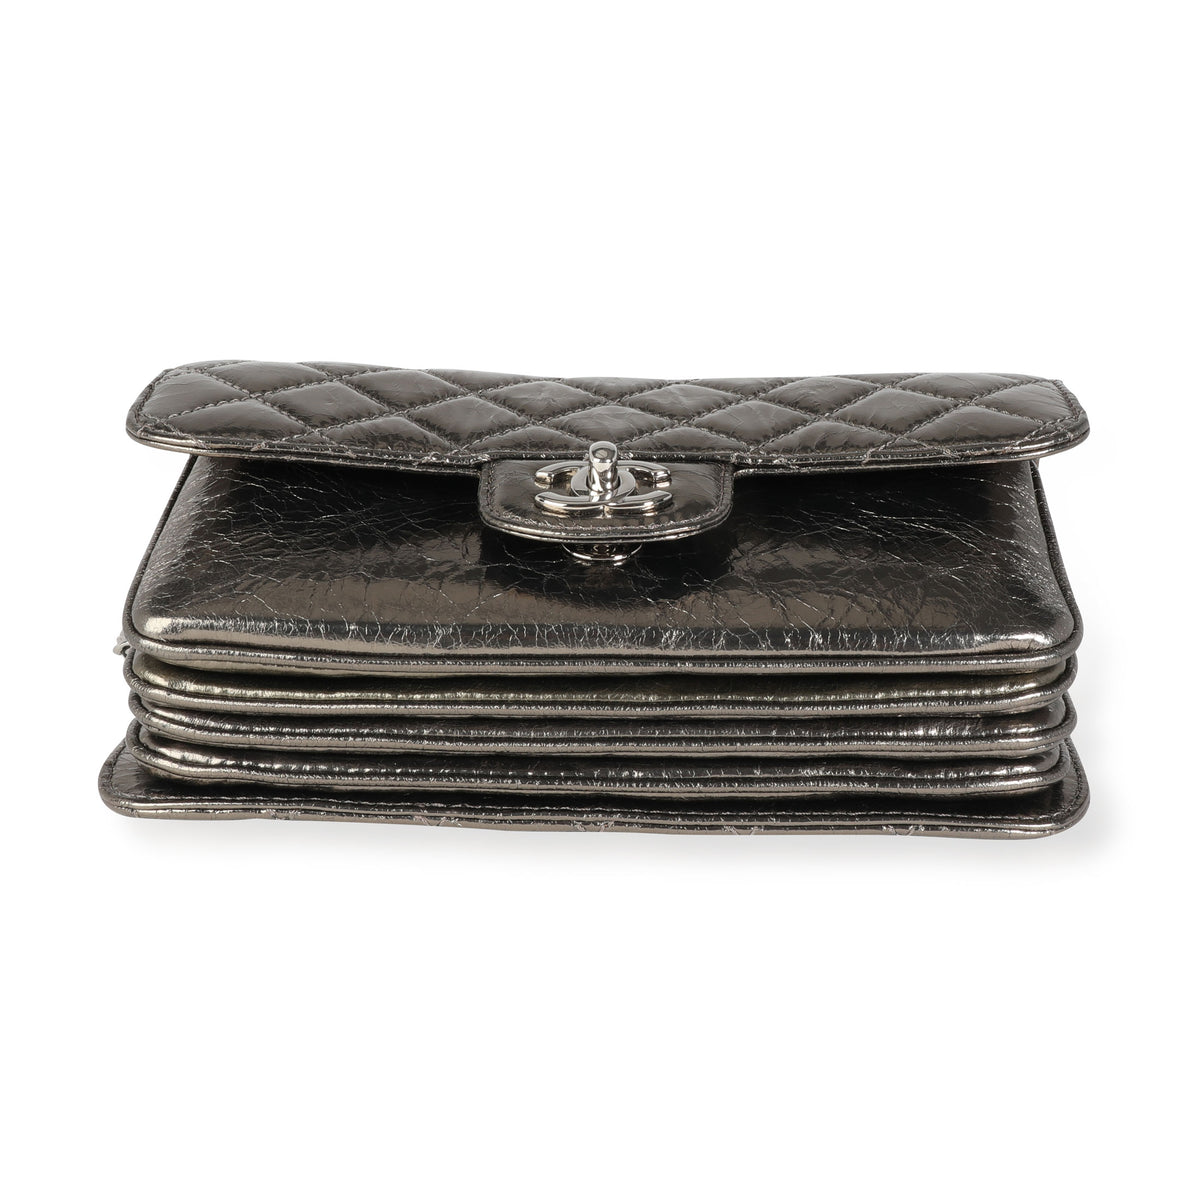 Chanel Metallic Cracked Leather Clams Pocket Accordion Flap Bag